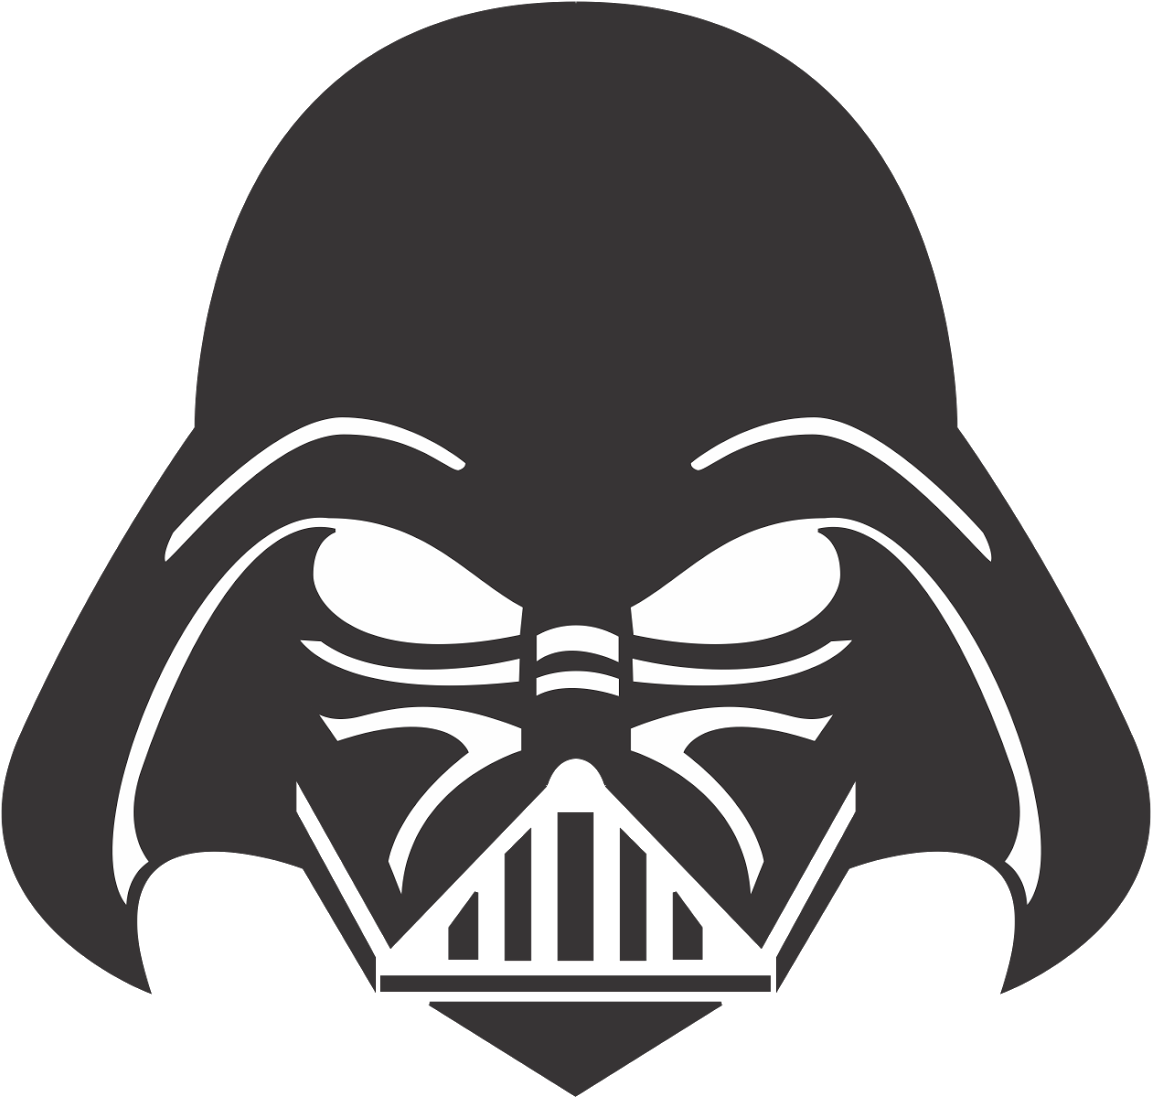 Darth Vader Mask PNG Image